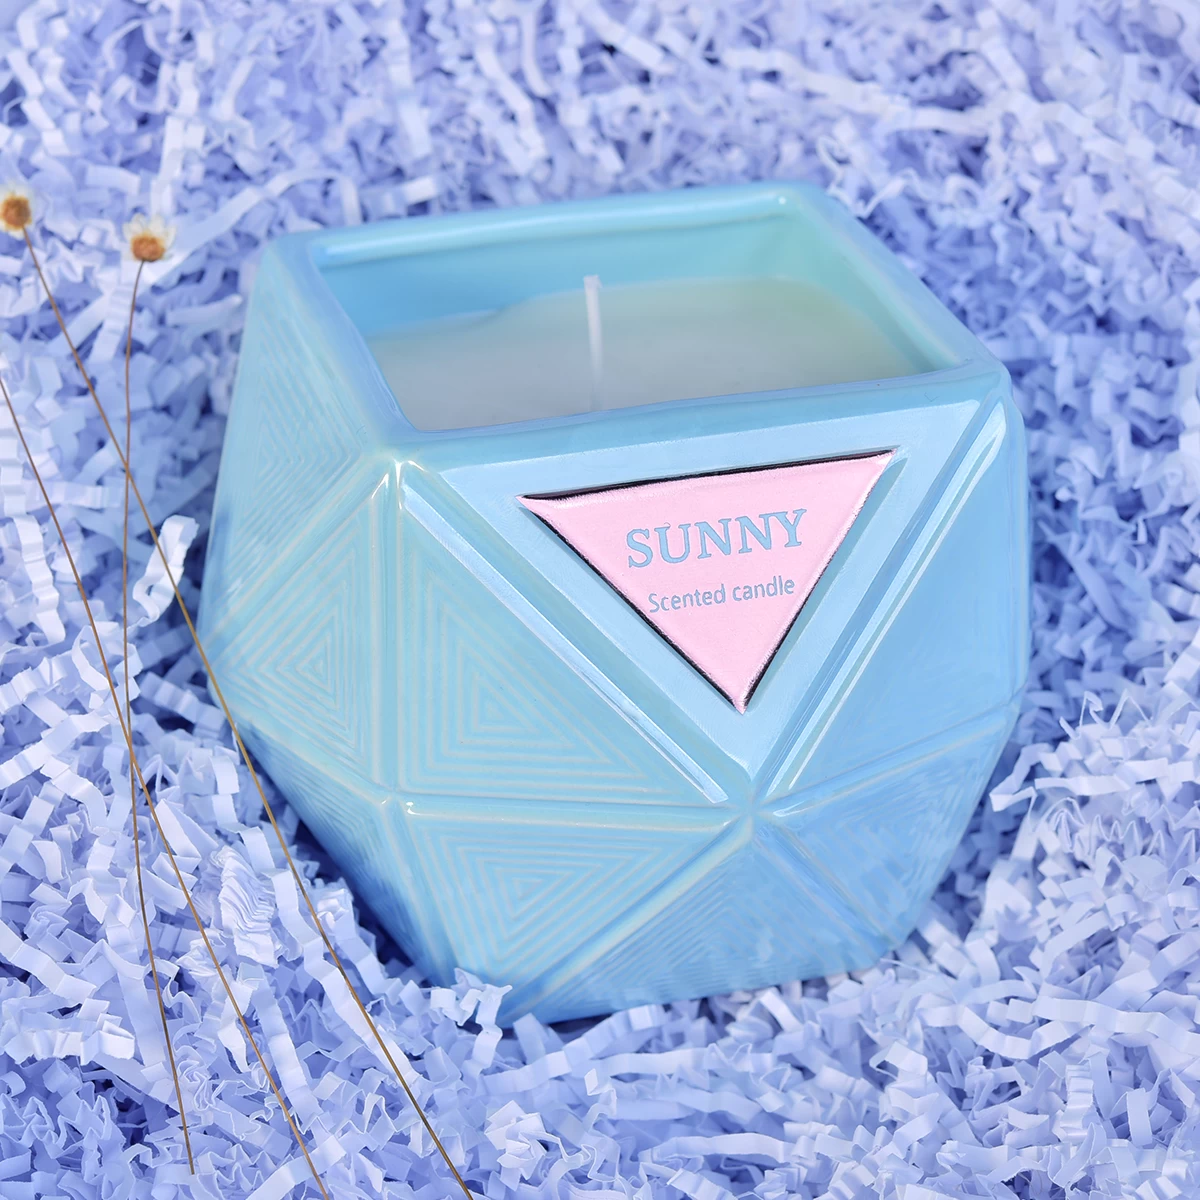 8oz 10oz Sunny scented geometric luxury glass votive candle jar